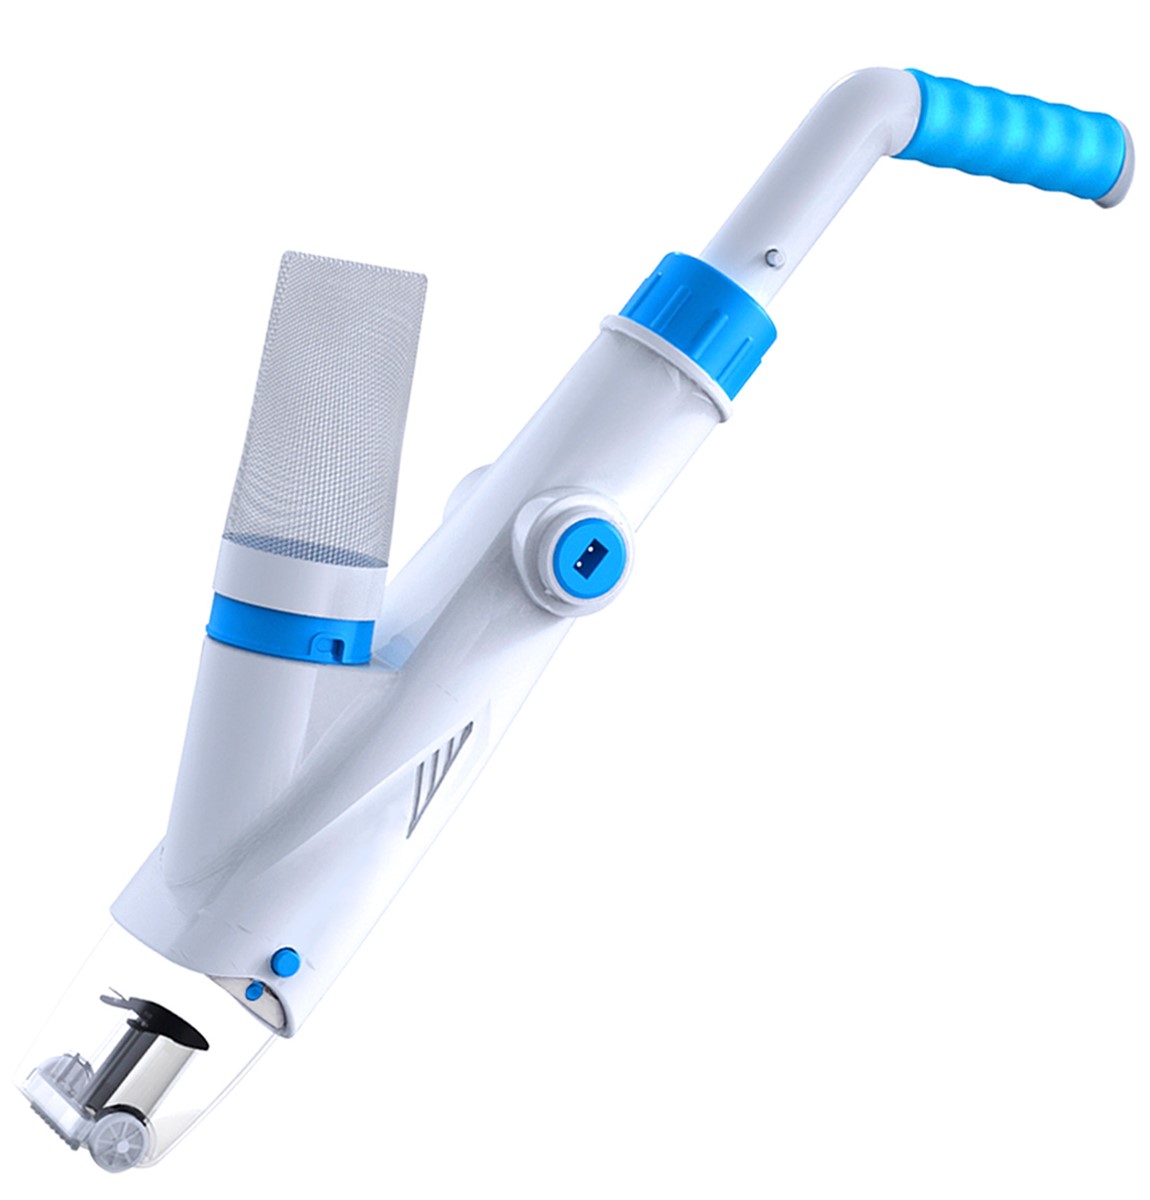 NetSpa Cleaner - Spa vacuum cleaner